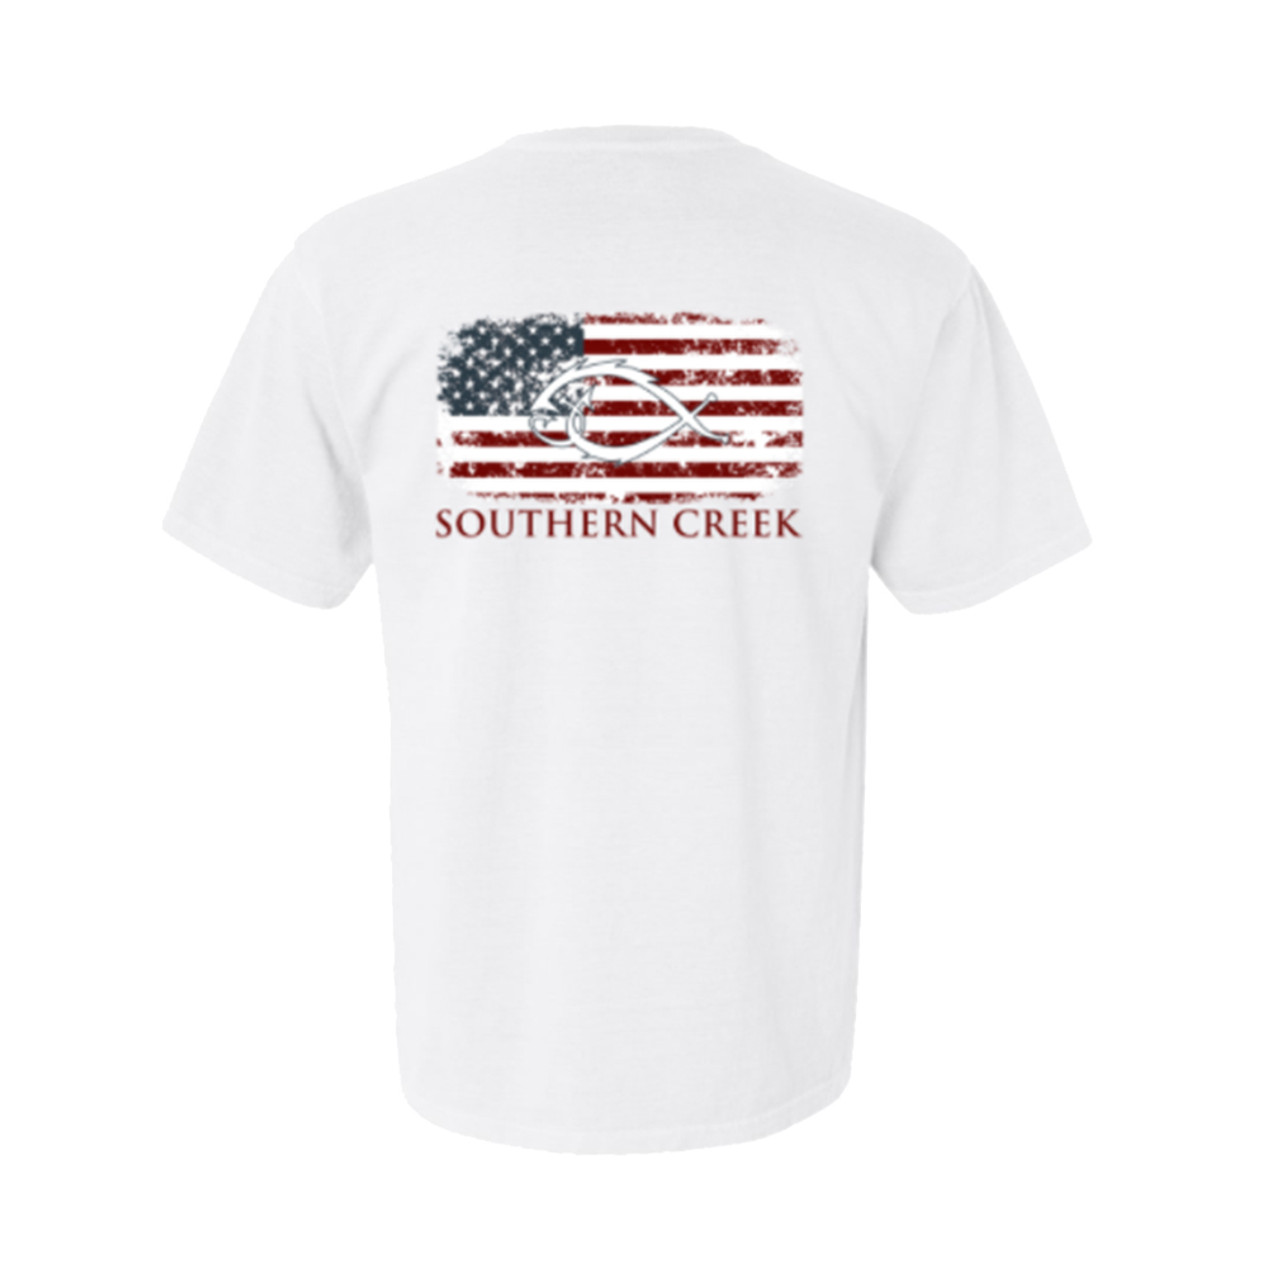 Southern Creek American Flag Classic Logo Outdoors Sporting Fishing Hook adult unisex Short Sleeve T-Shirt